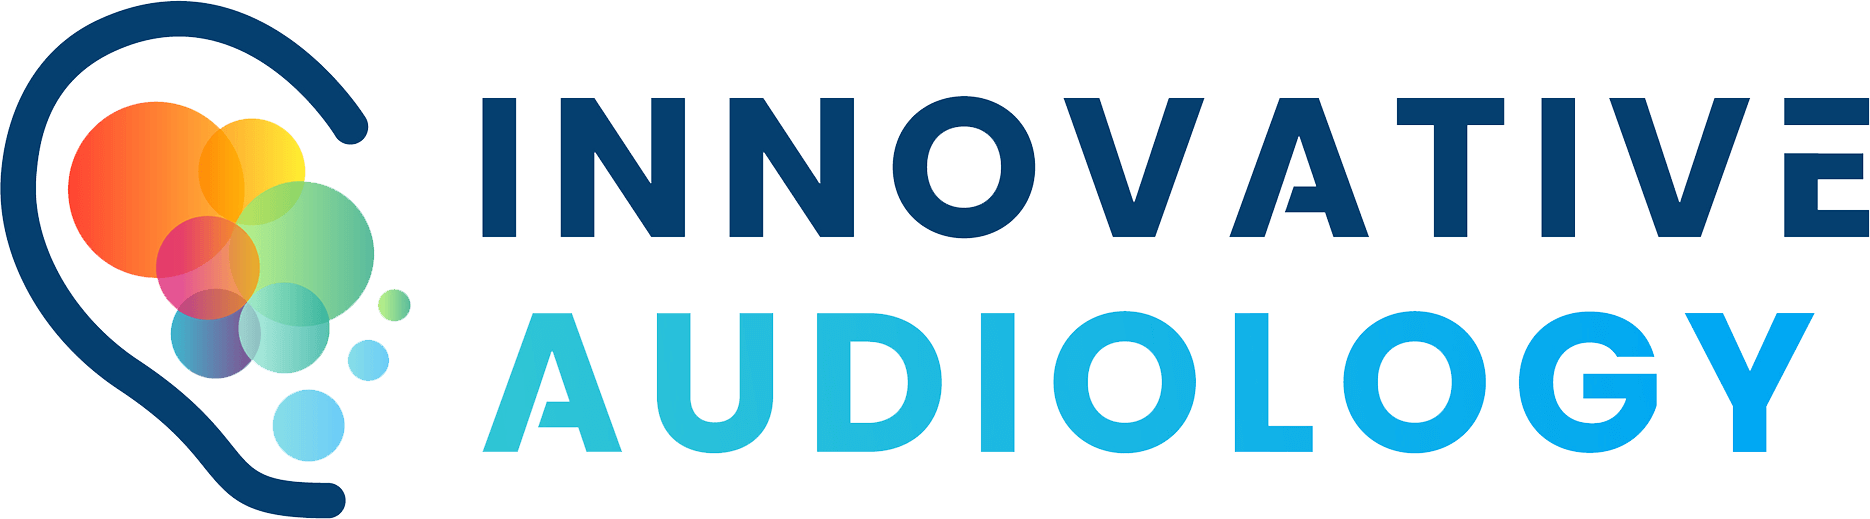 Innovative Audiology logo